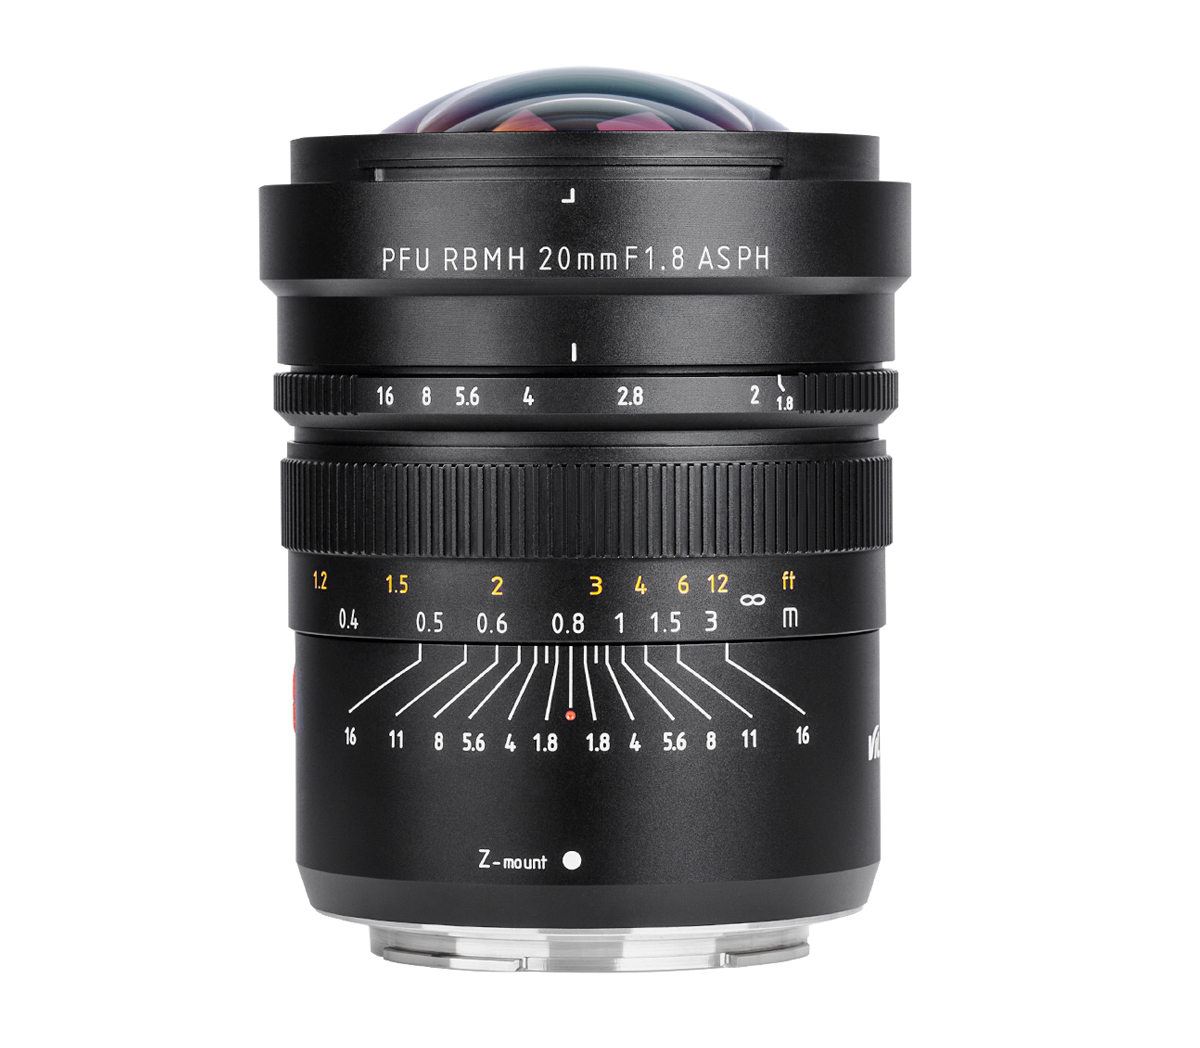 VILTROX PFU RBMH ASPH Zマウント用 Z6 単焦点レンズ F1.8 広角レンズ 20mm Nikon Zマウント  パノラマ撮影に最適 マニュアルフォーカス フルサイズ ニコン ミラーレス一眼カメラ対応 交換レンズ